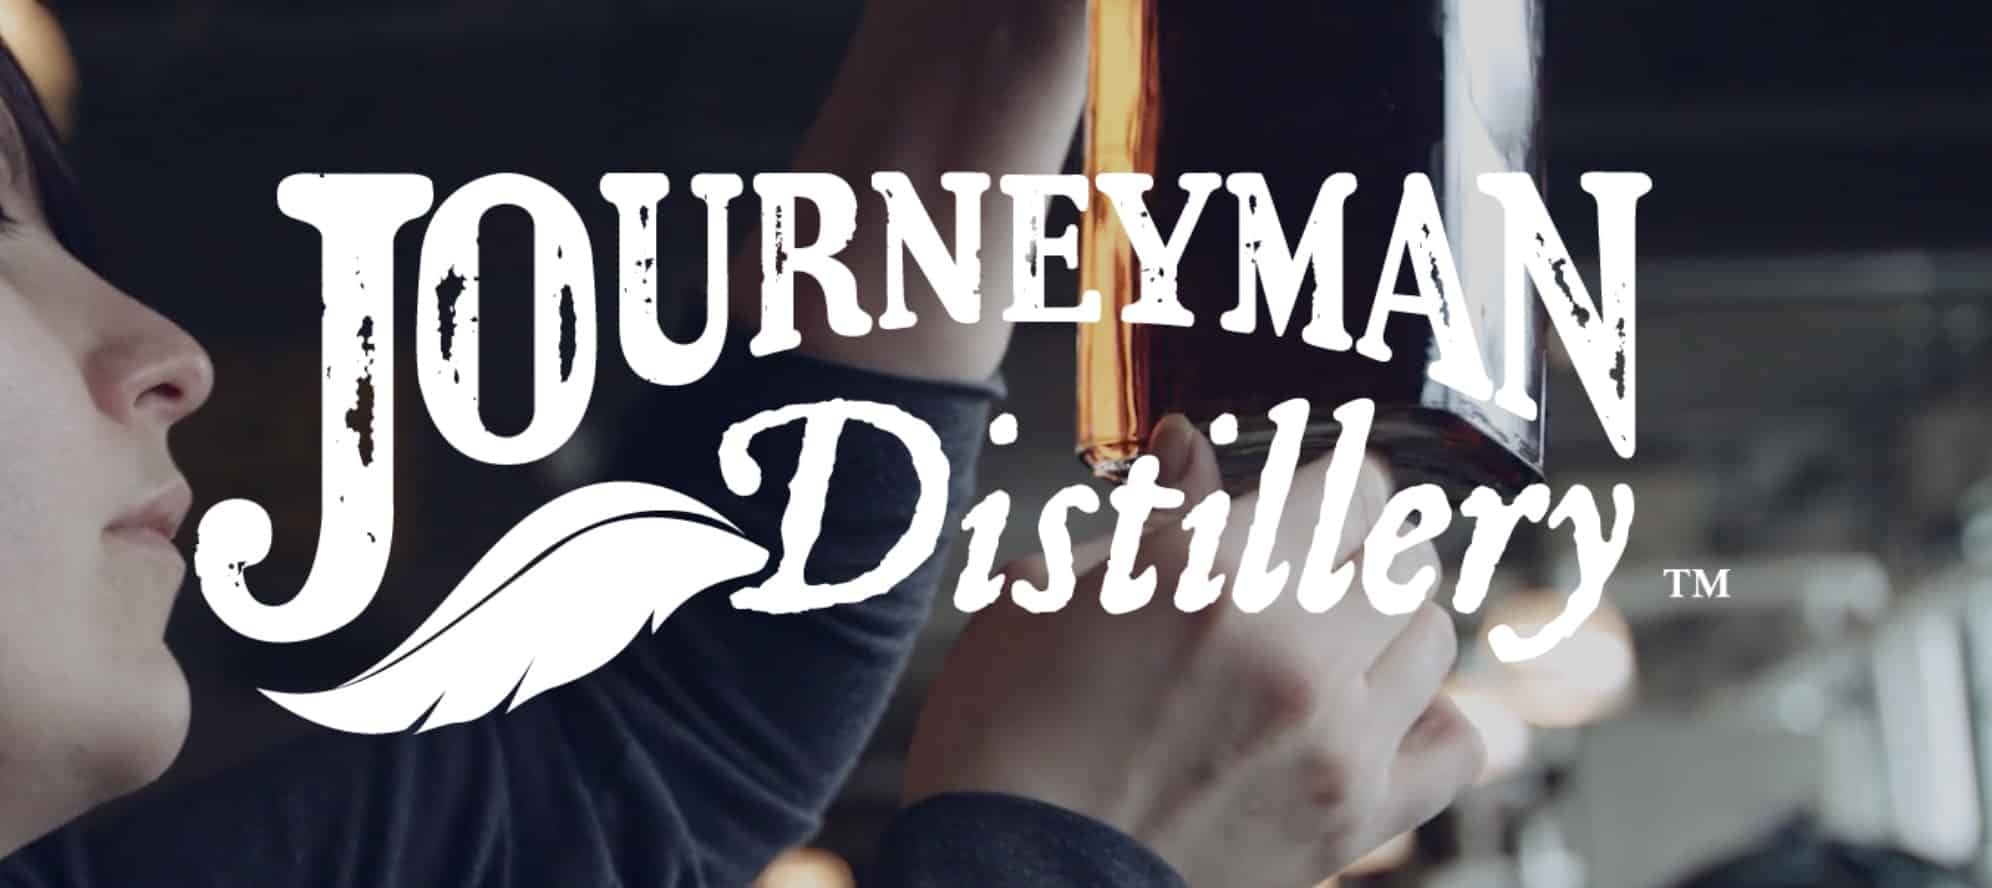 journeyman distillery logo